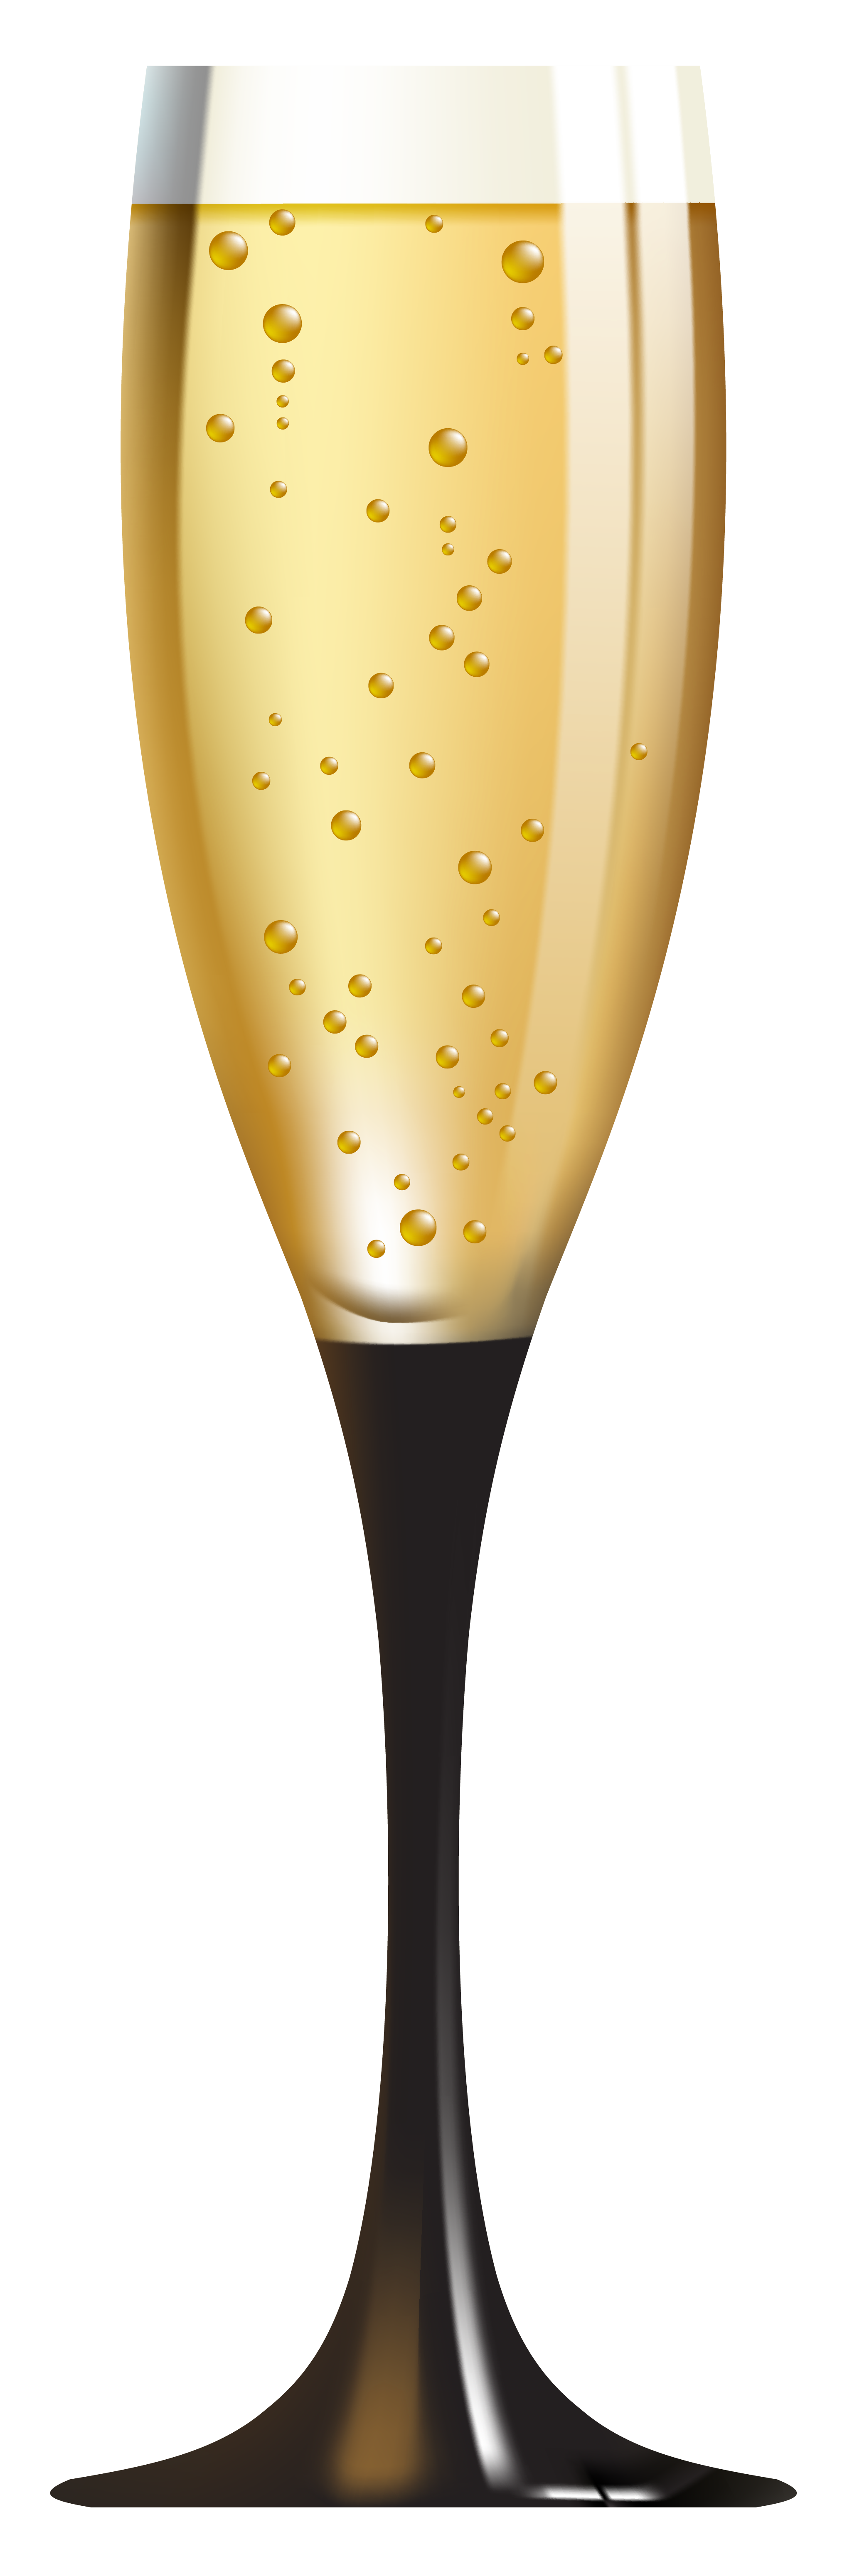 Champagne glass clip art free - Champagne Glasses Clip Art